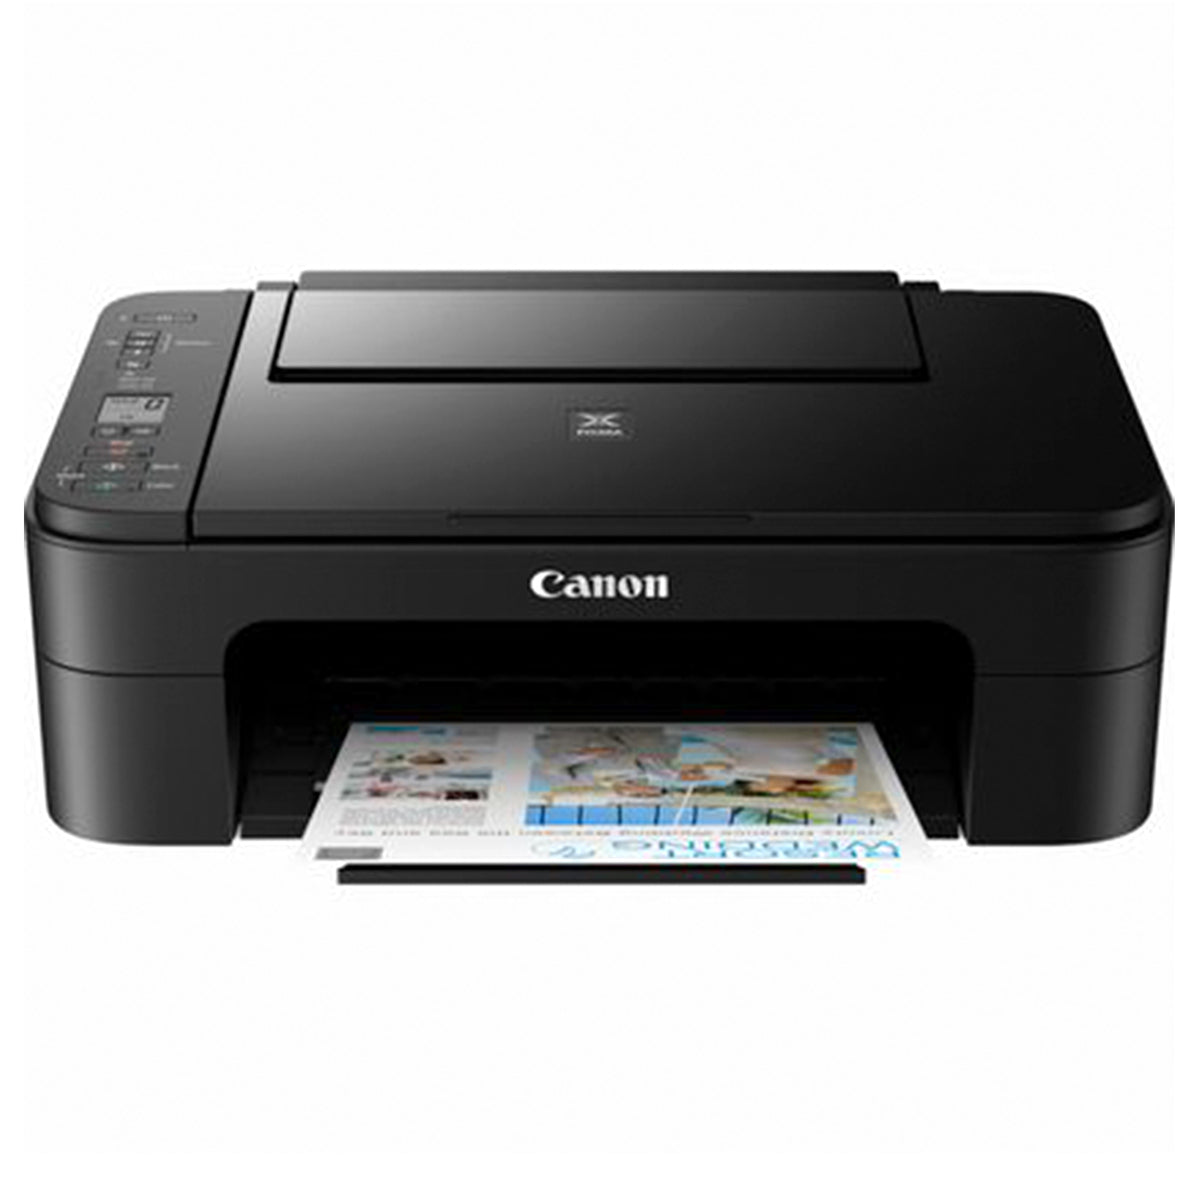 Canon Pixma TS 3340 Inkjet Printer